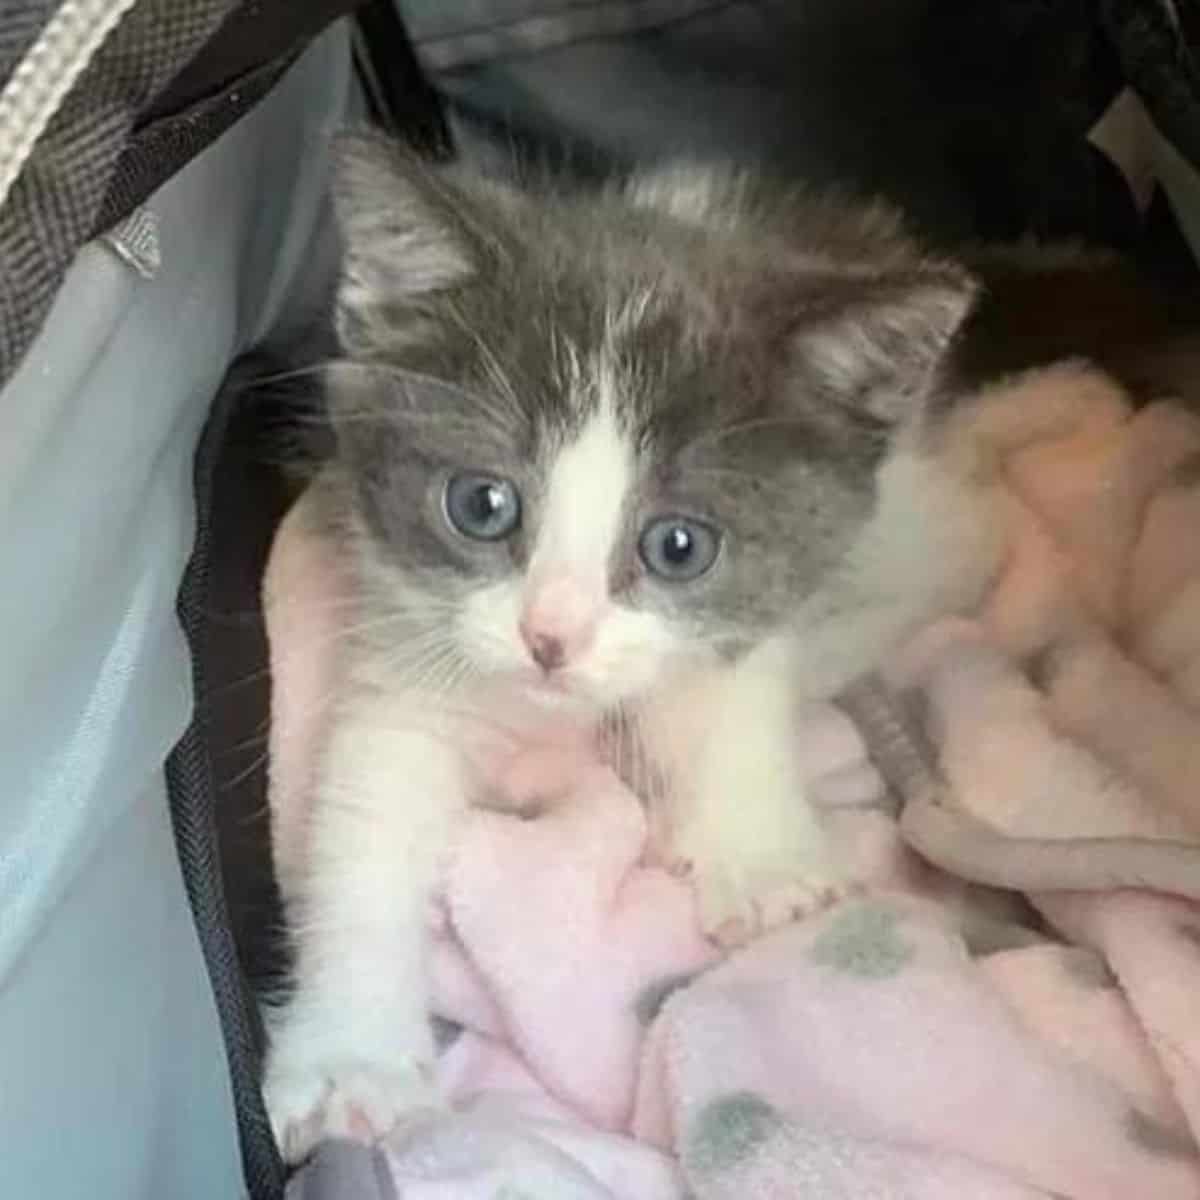 scared kitten on a pink blanket